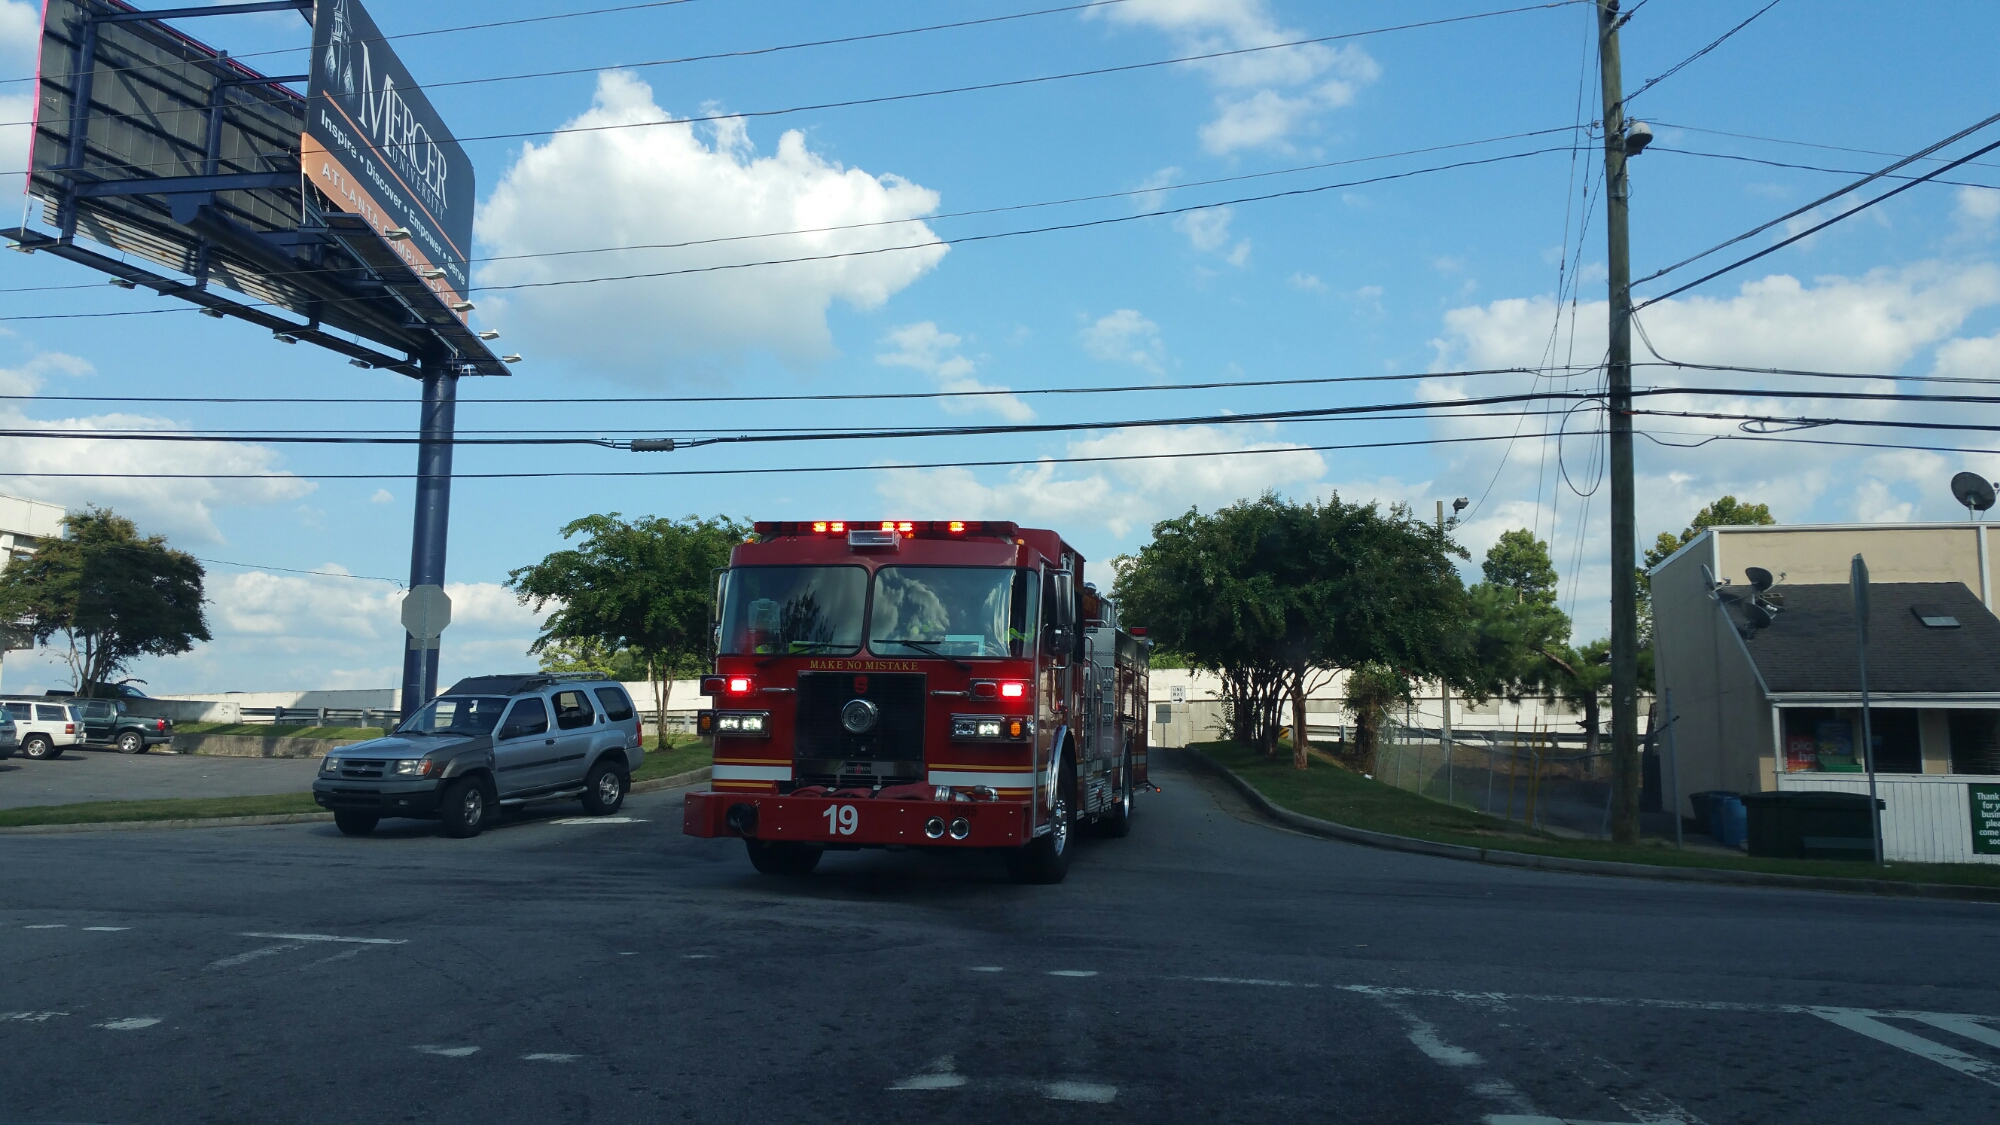 Photo: Fire trucks respond to call